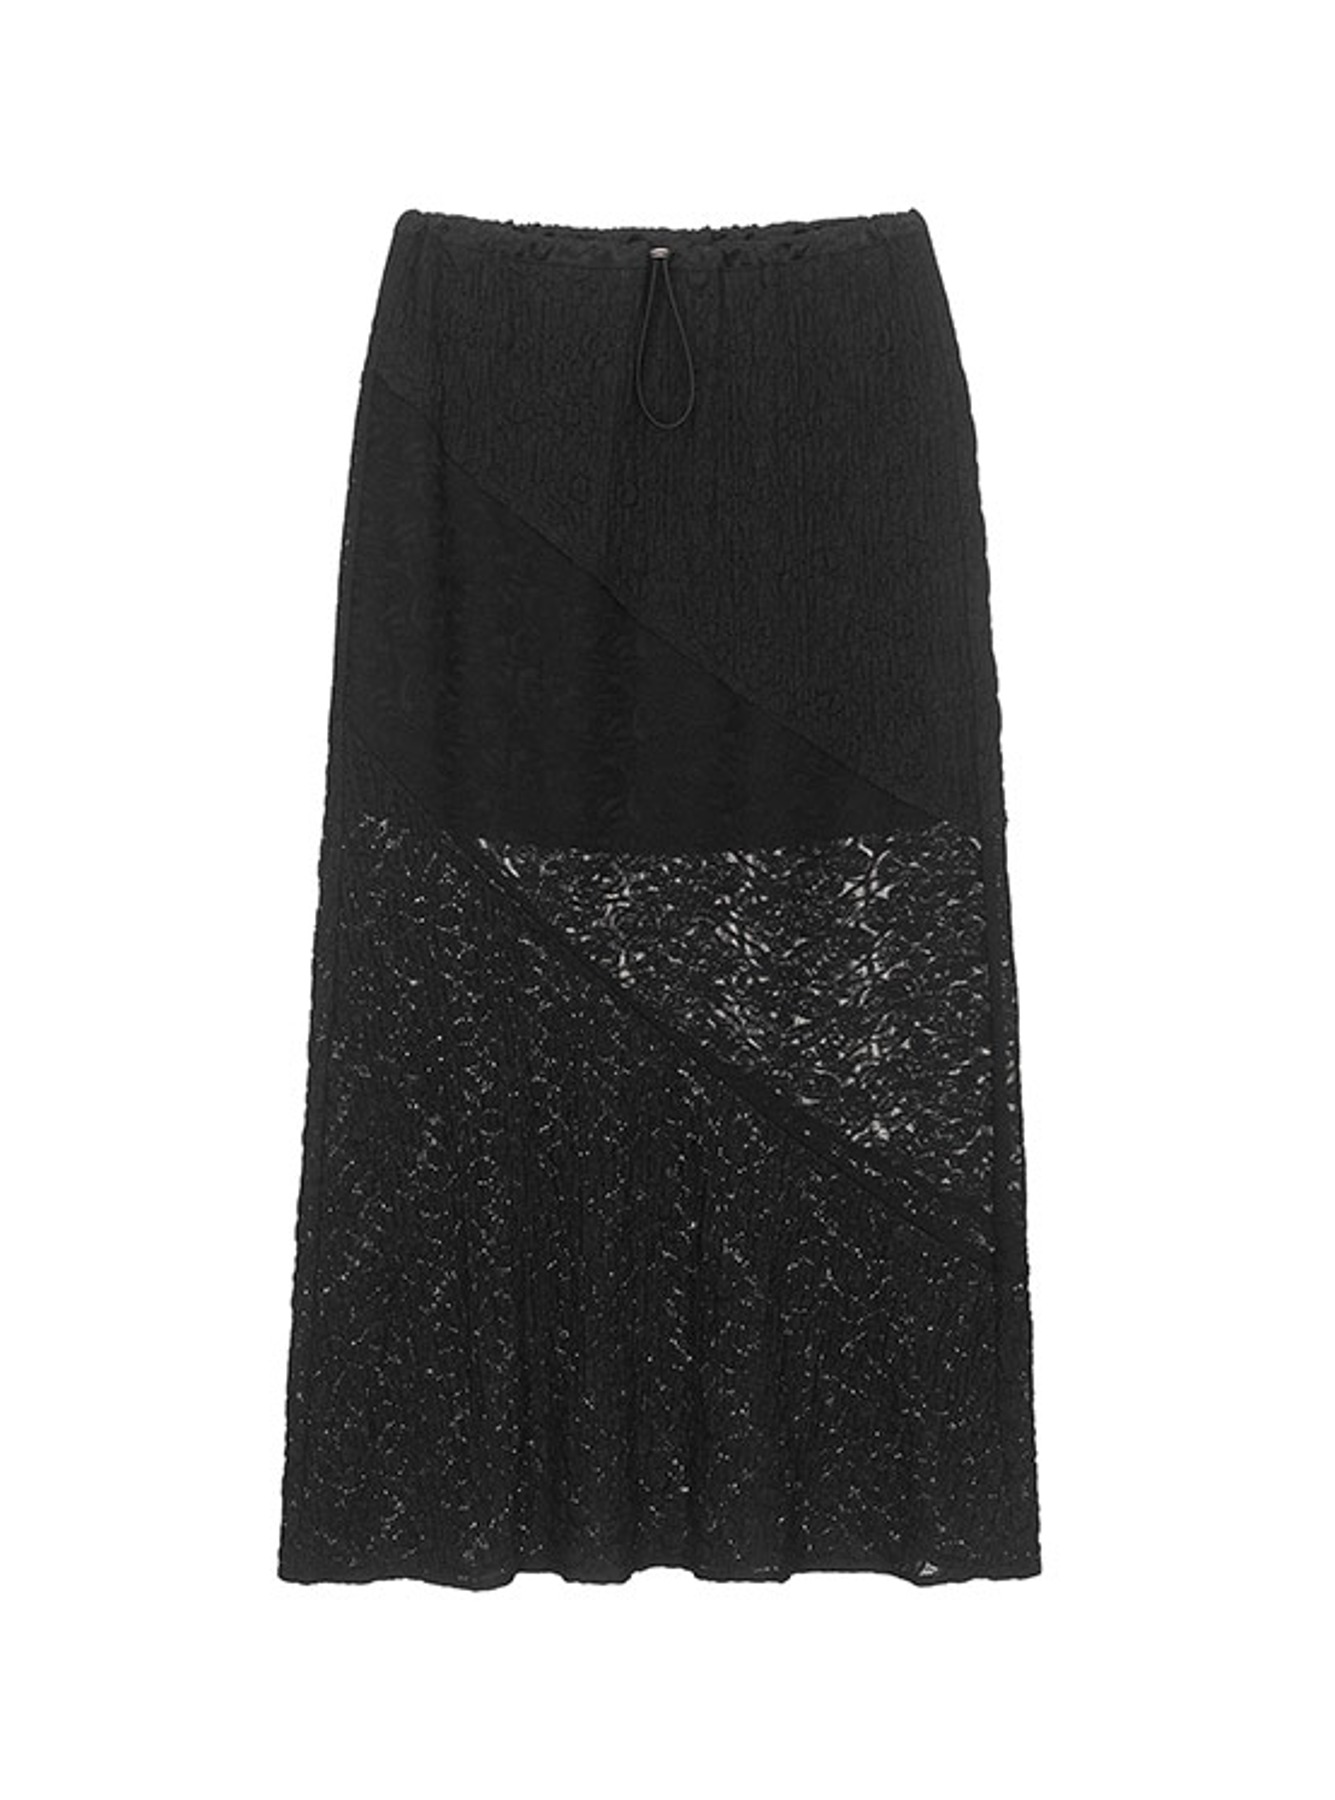 Lace Long Skirt in Black VW4SS127-10